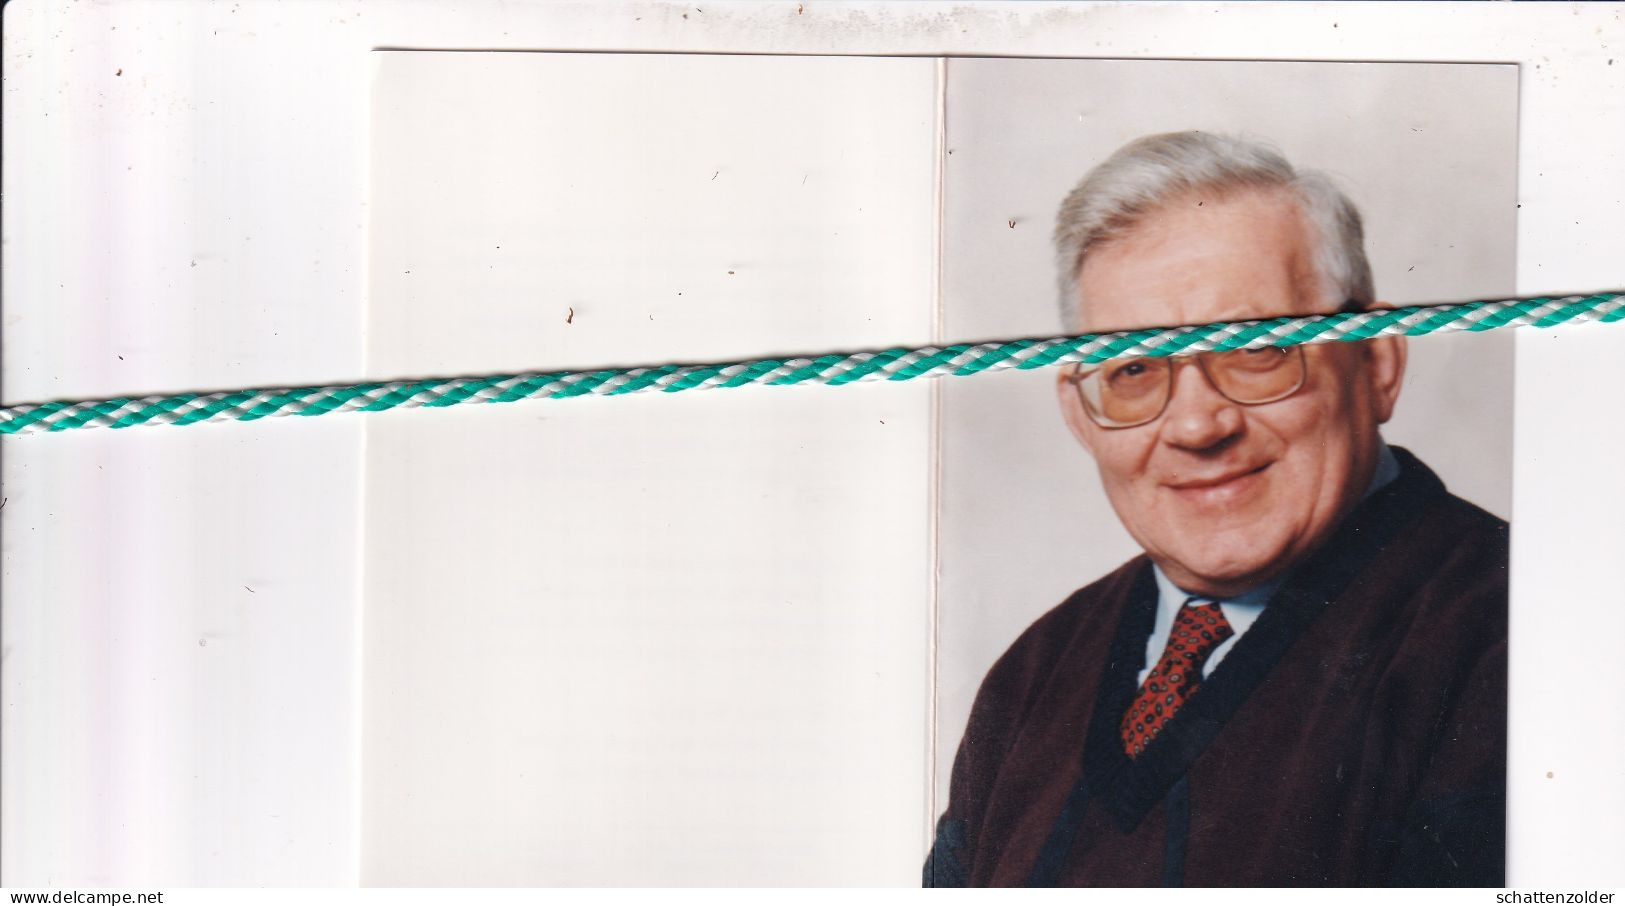 Guillaume (Jommeke) Rogge-Valkenaers, Mechelen 1929, Antwerpen 1997. Banketbakker O.r. Foto - Obituary Notices